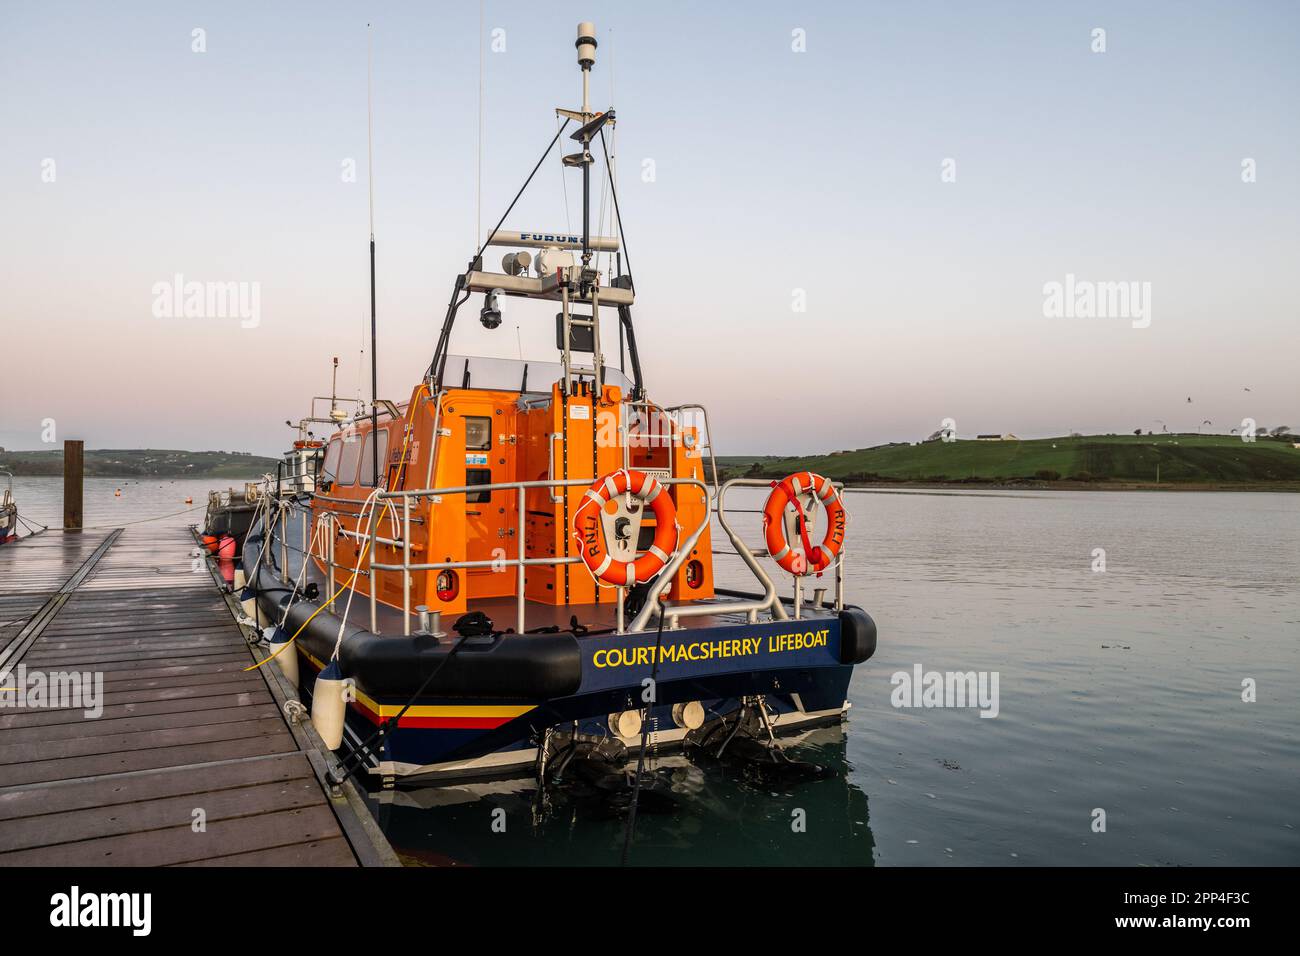 RNLI Lifeboat Val Adnams 13-45 ormeggiato a Courtmacsherry, West Cork, Irlanda. Foto Stock